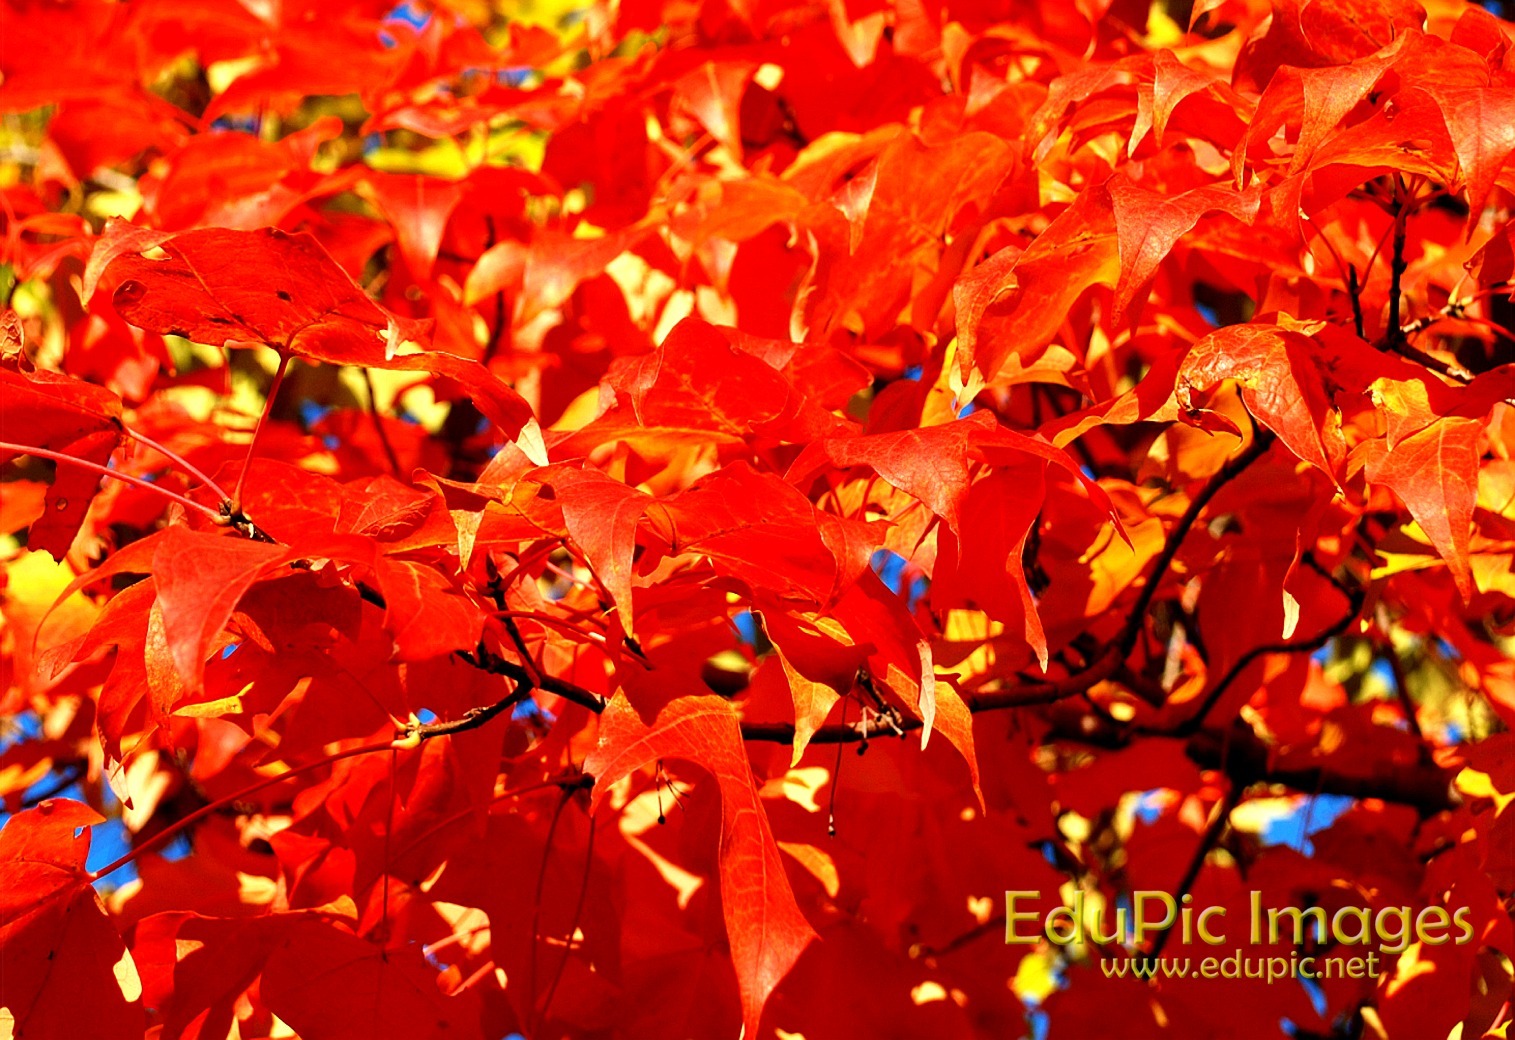 Fall Colors Desktop Wallpaper Pictures